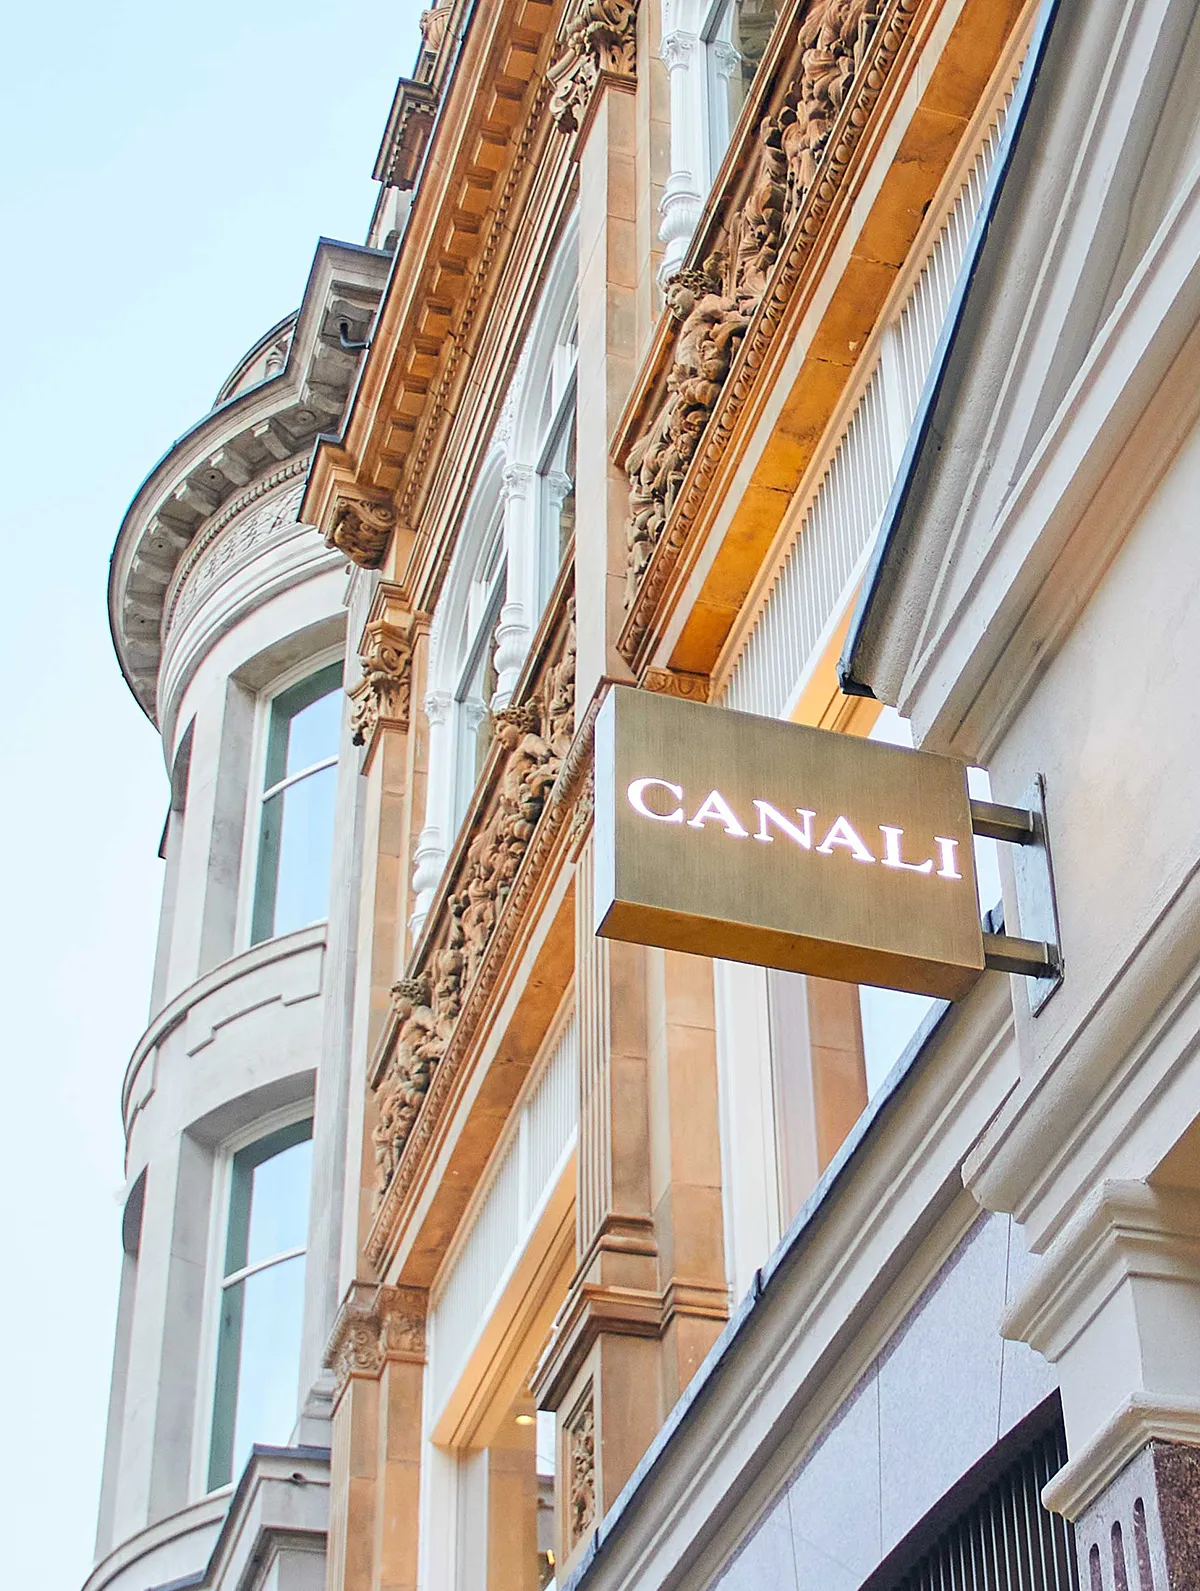 Canali - 意大利与英国文化的融合。在Mayfair区中心，保持平衡和庄重。 - By HDG